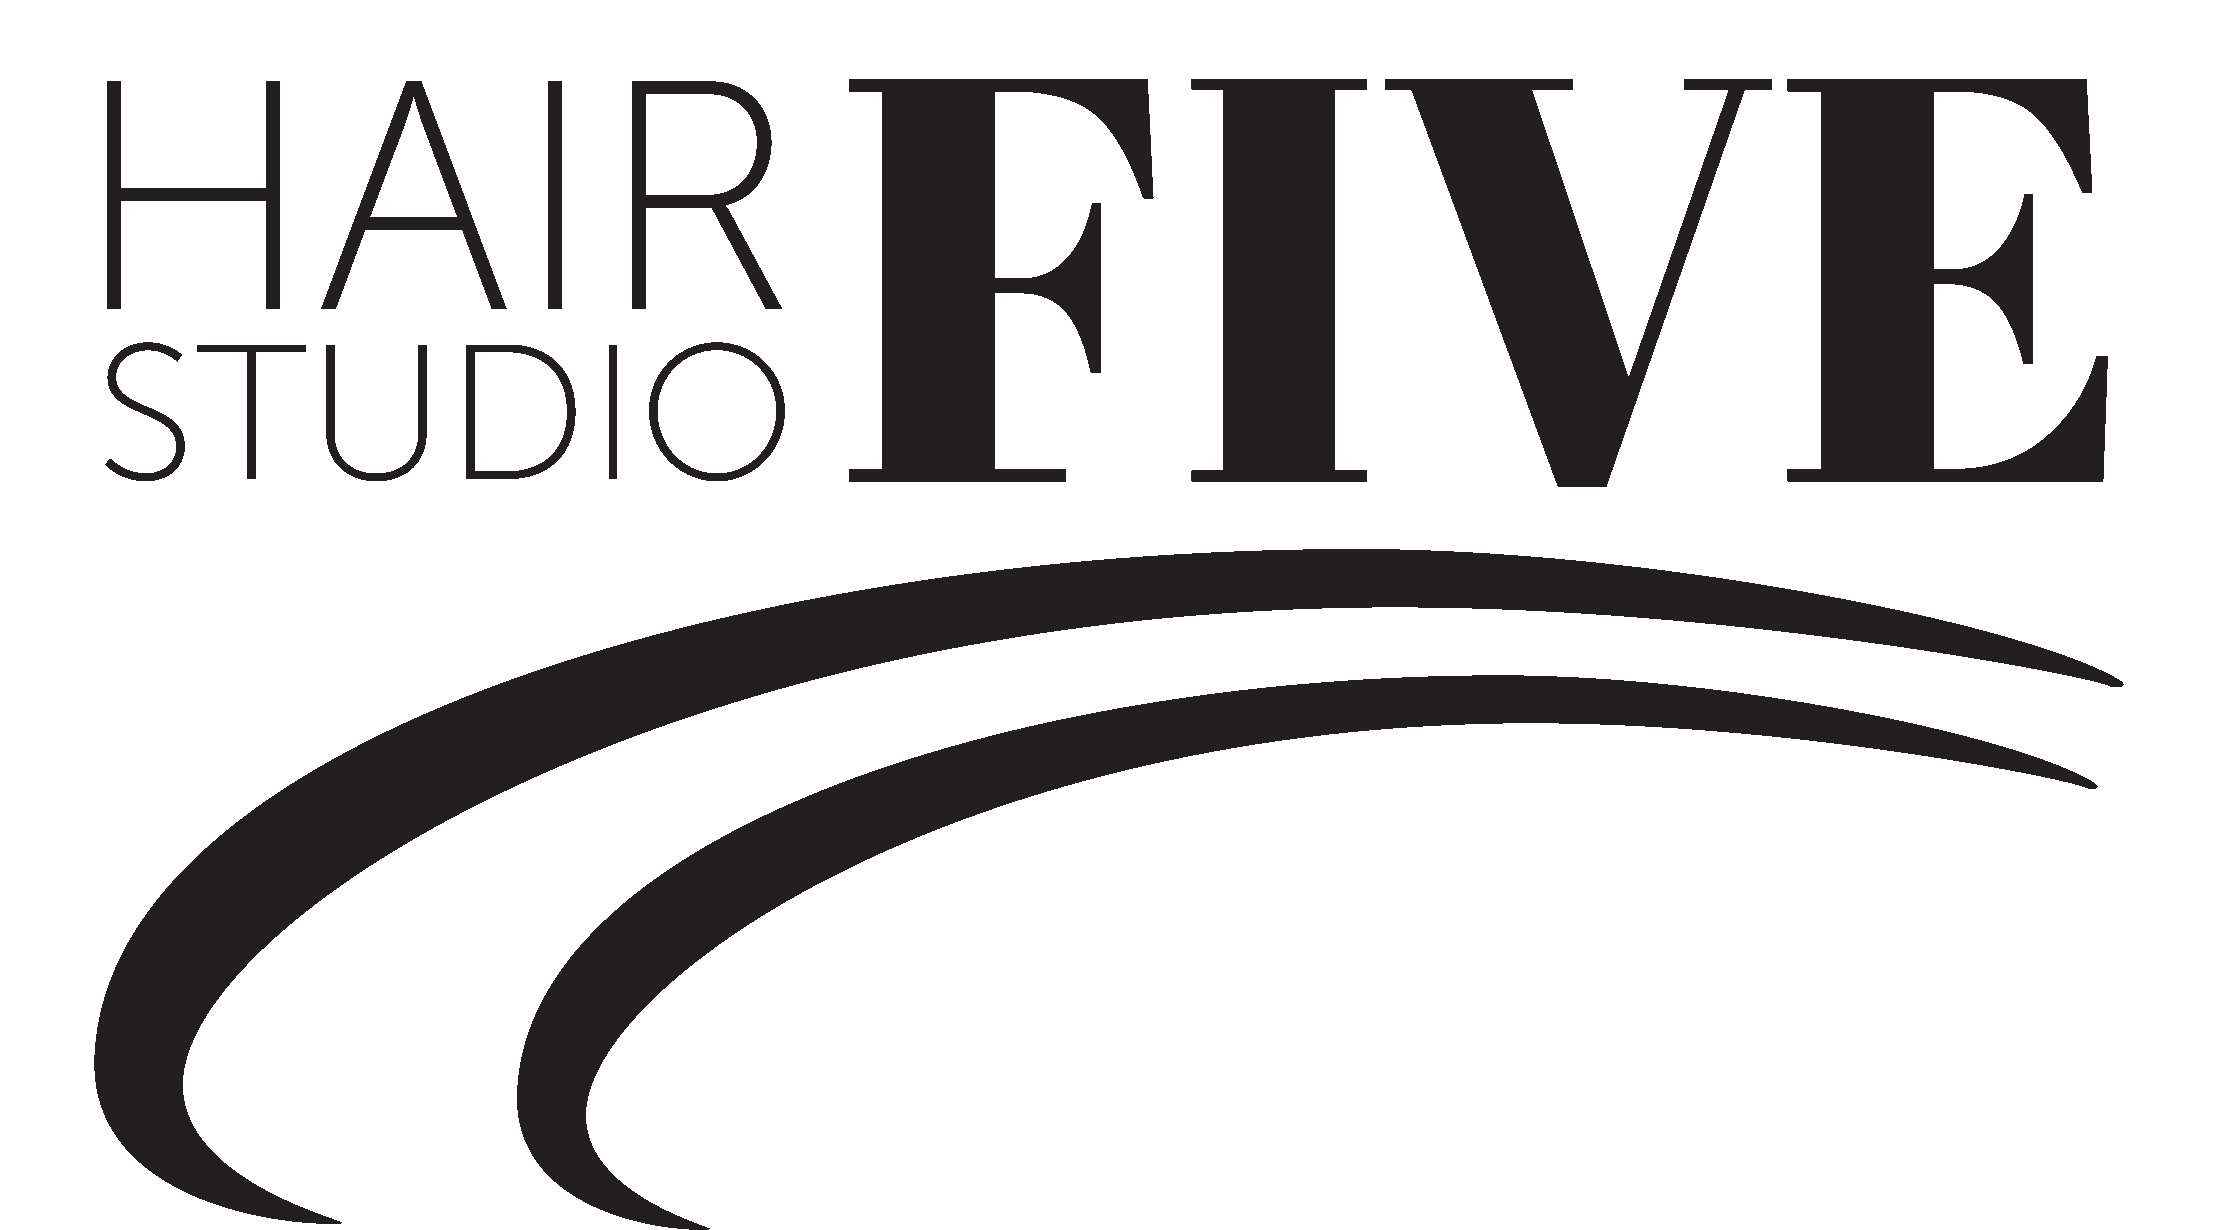 Hair Studio Five